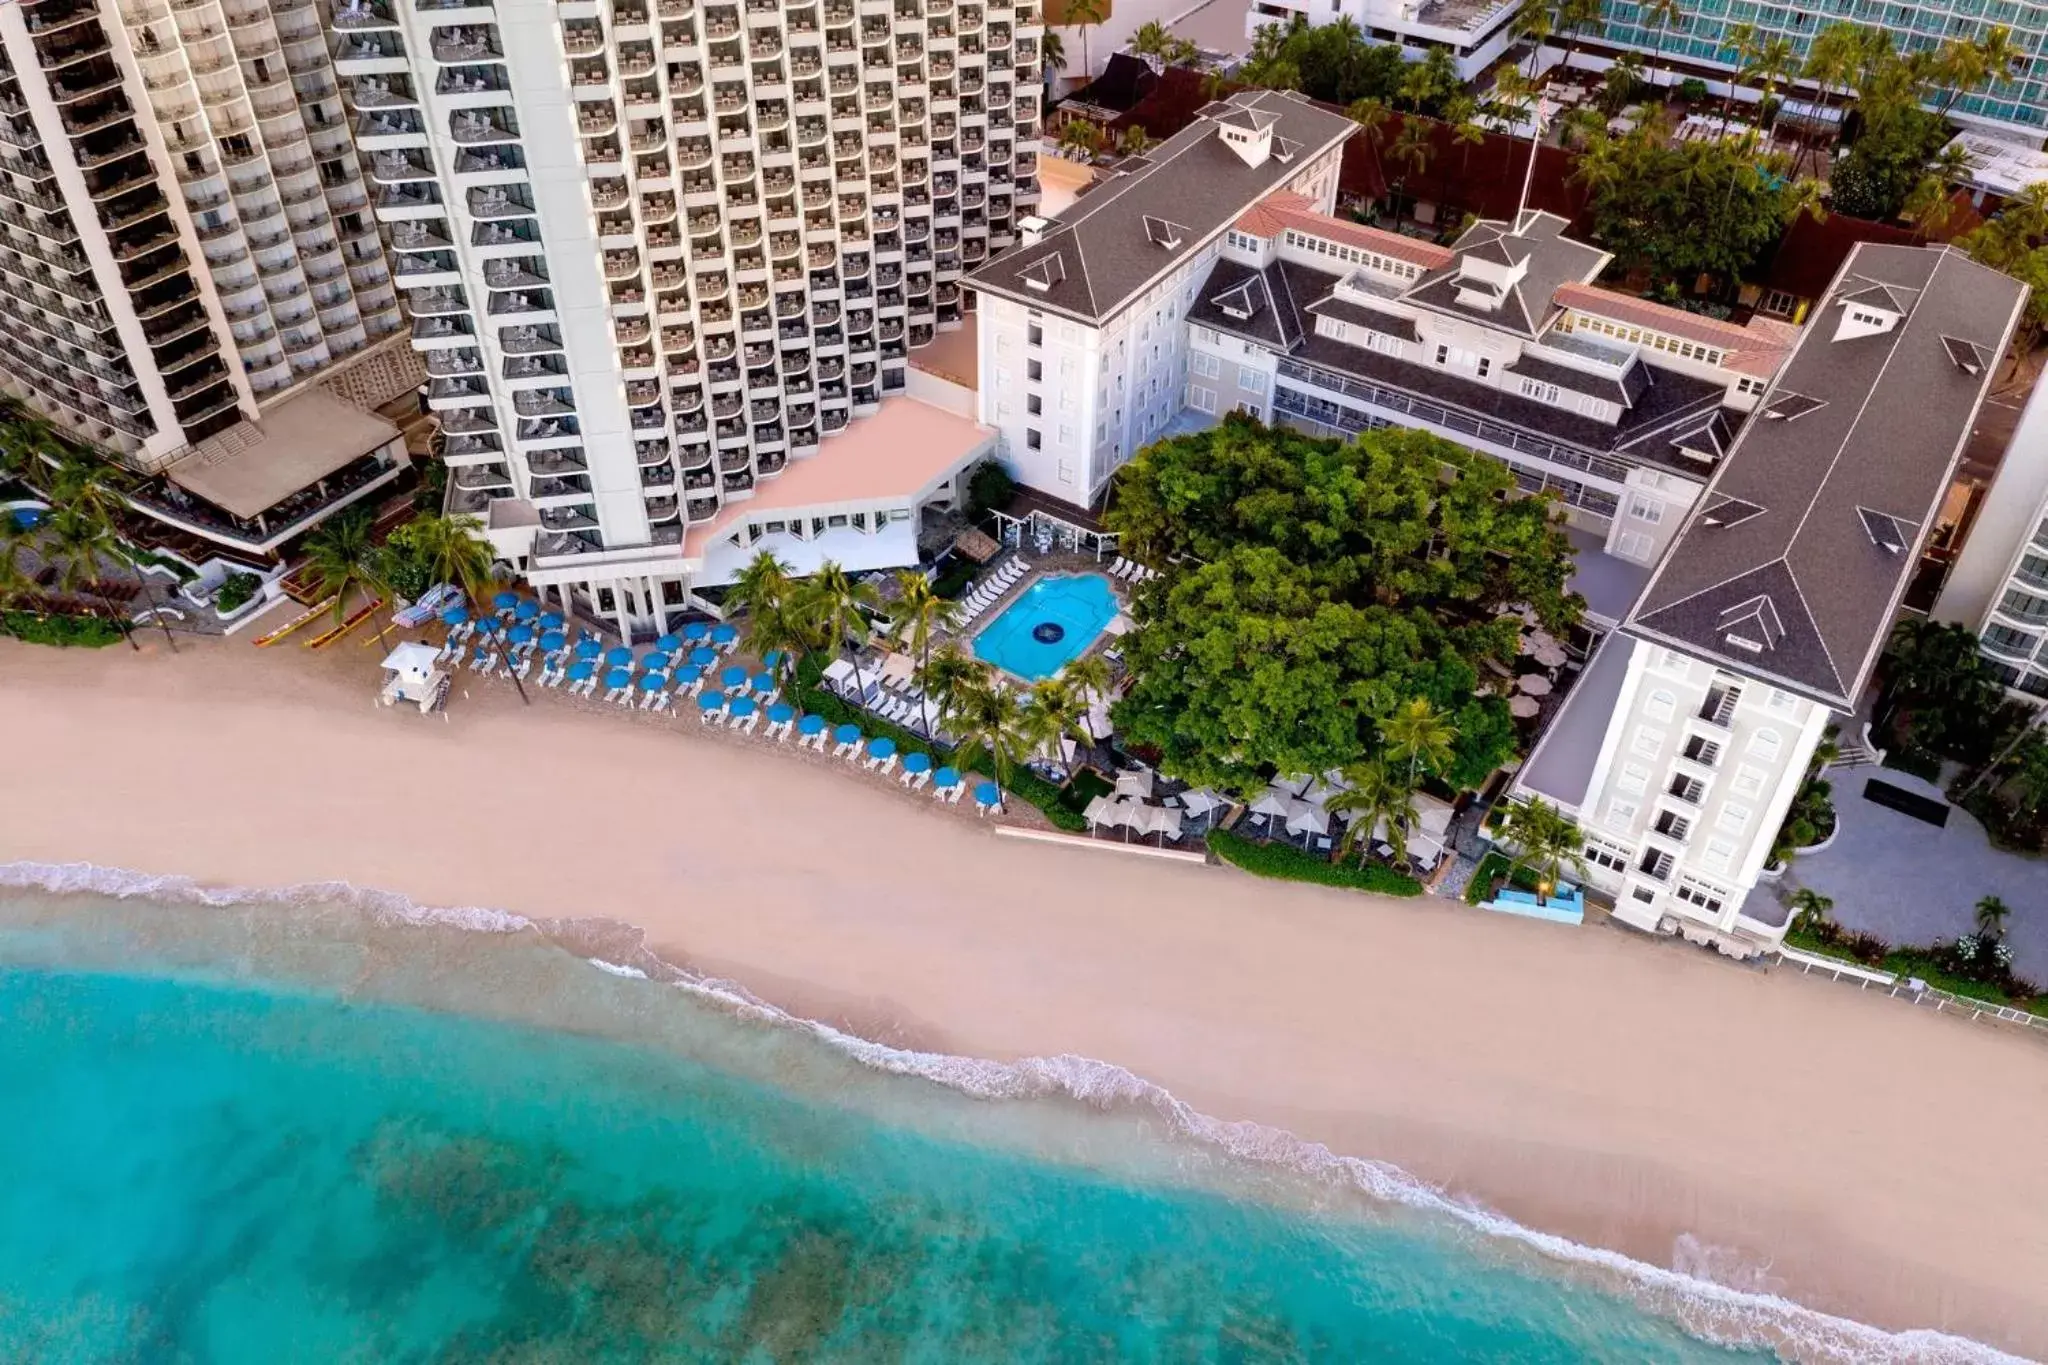 Property building, Bird's-eye View in Moana Surfrider, A Westin Resort & Spa, Waikiki Beach